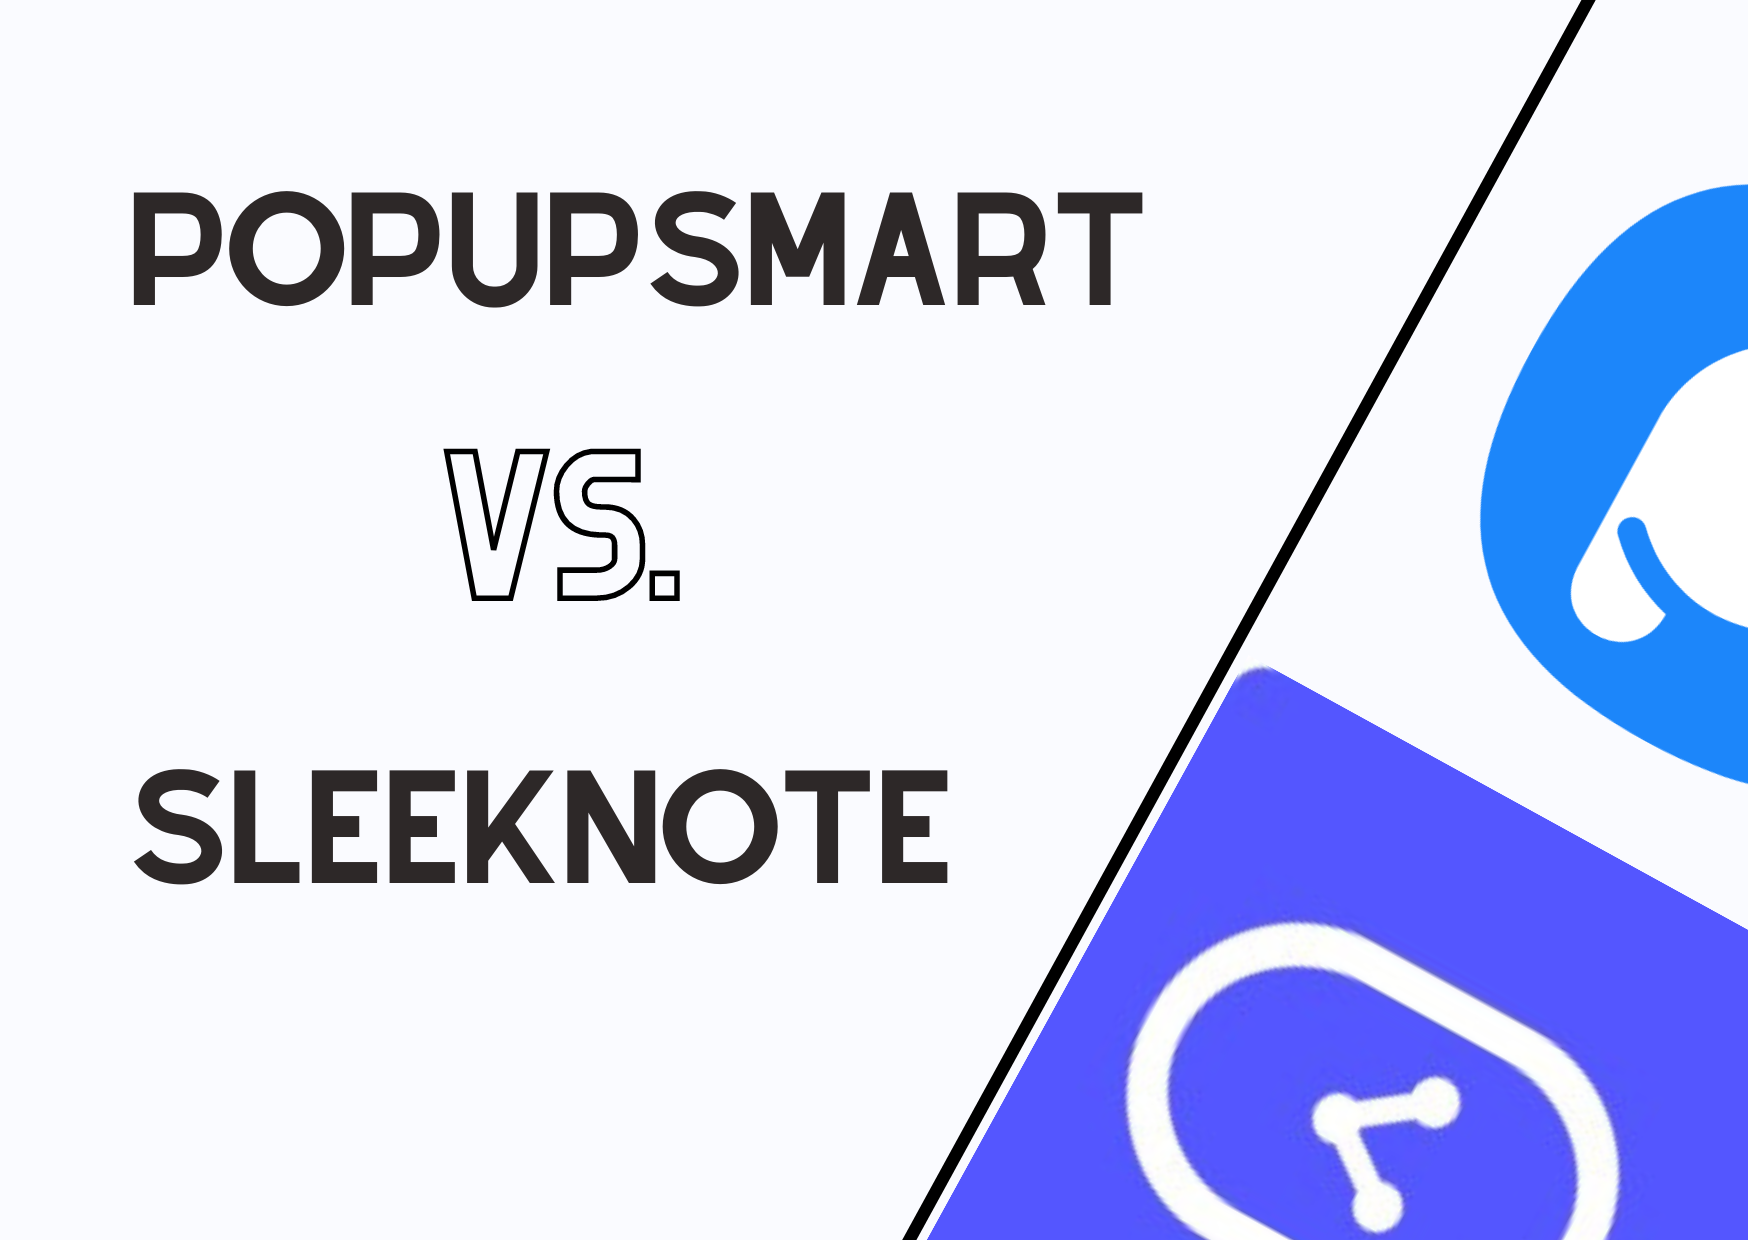 Popupsmart vs. Sleeknote comparison image